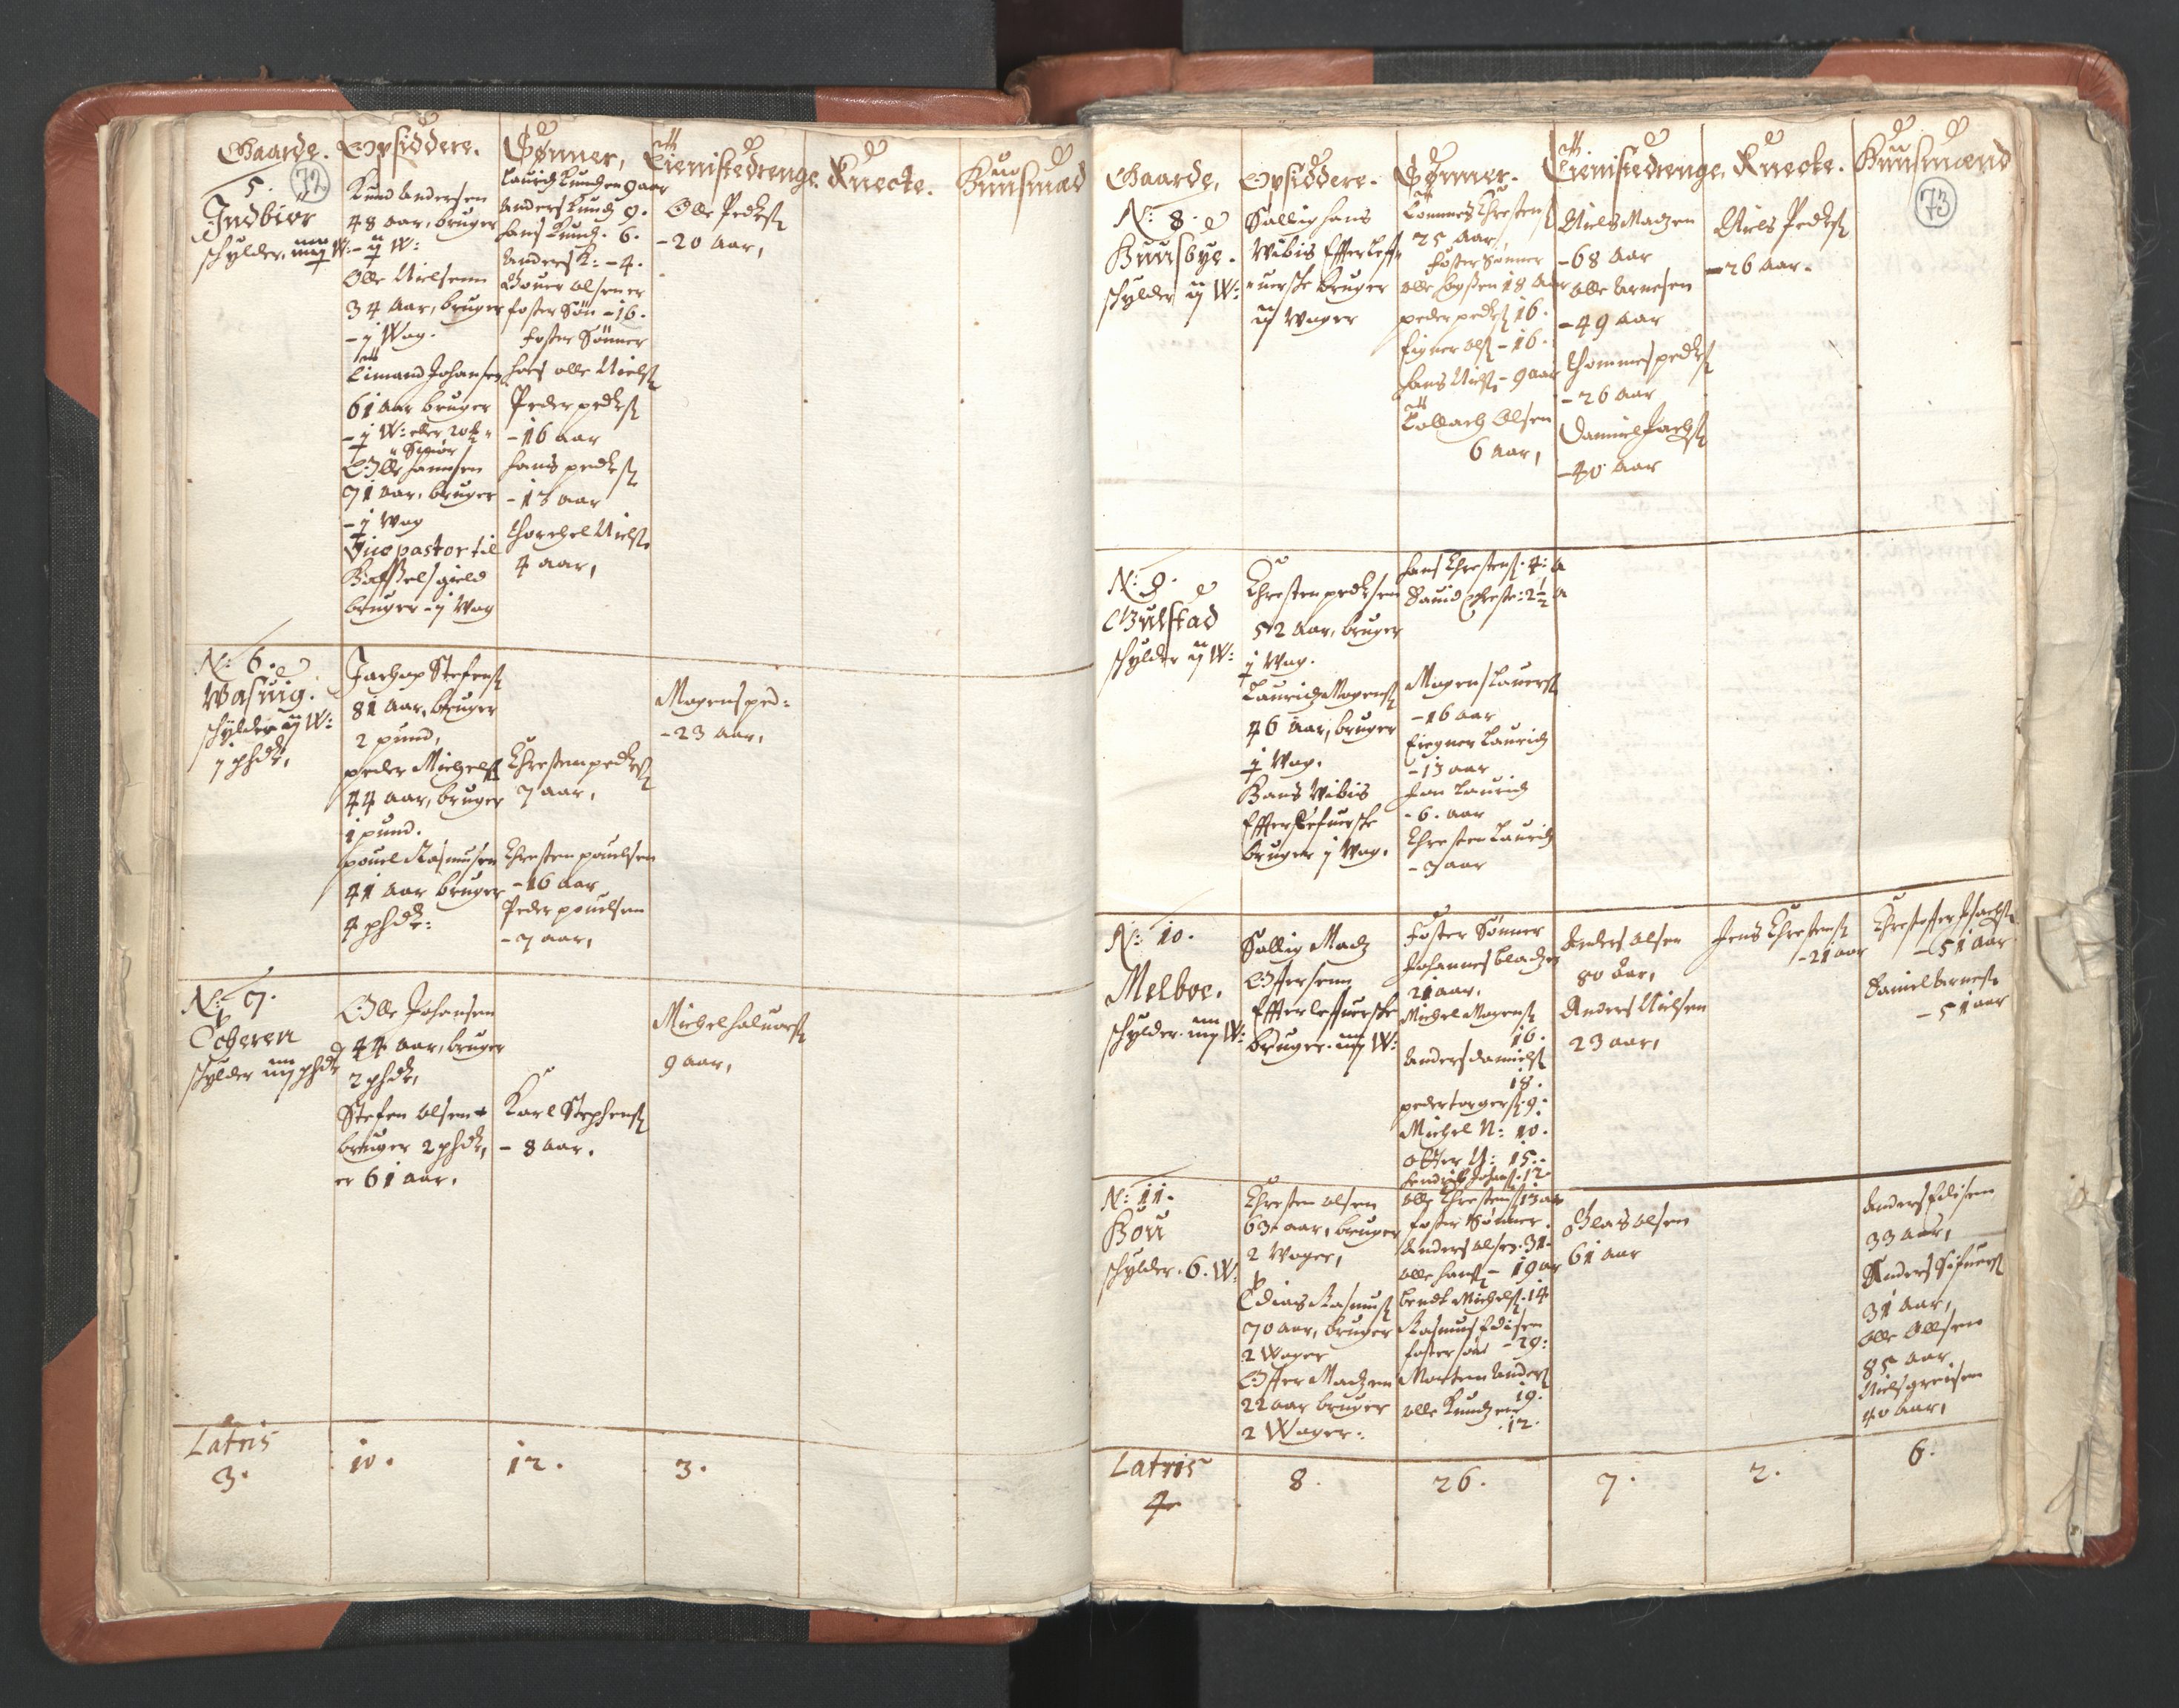 RA, Vicar's Census 1664-1666, no. 36: Lofoten and Vesterålen deanery, Senja deanery and Troms deanery, 1664-1666, p. 72-73